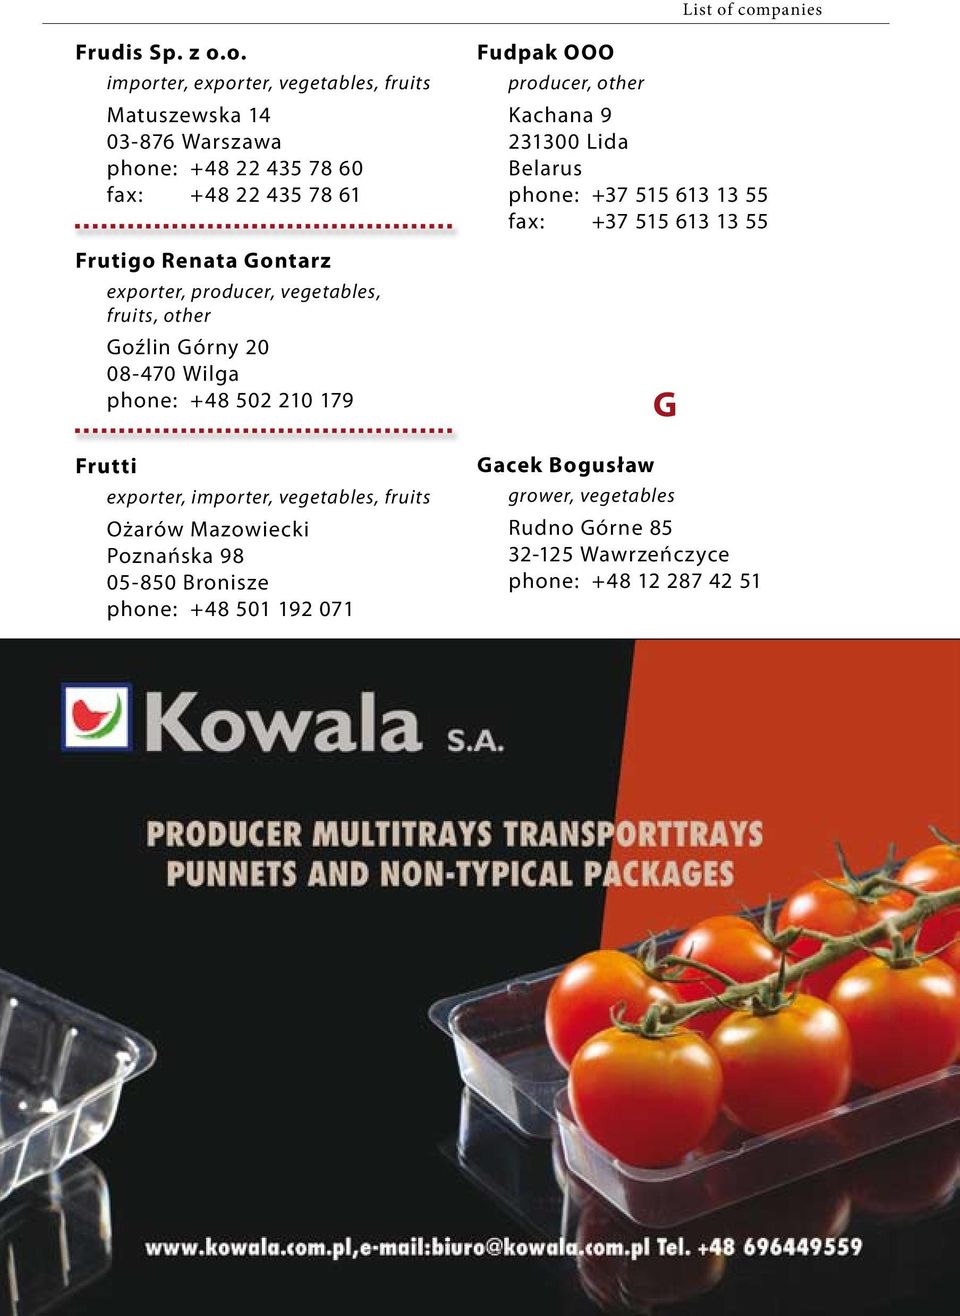 Gontarz exporter, producer, vegetables, fruits, other Goźlin Górny 20 08-470 Wilga phone: +48 502 210 179 Frutti exporter, importer,